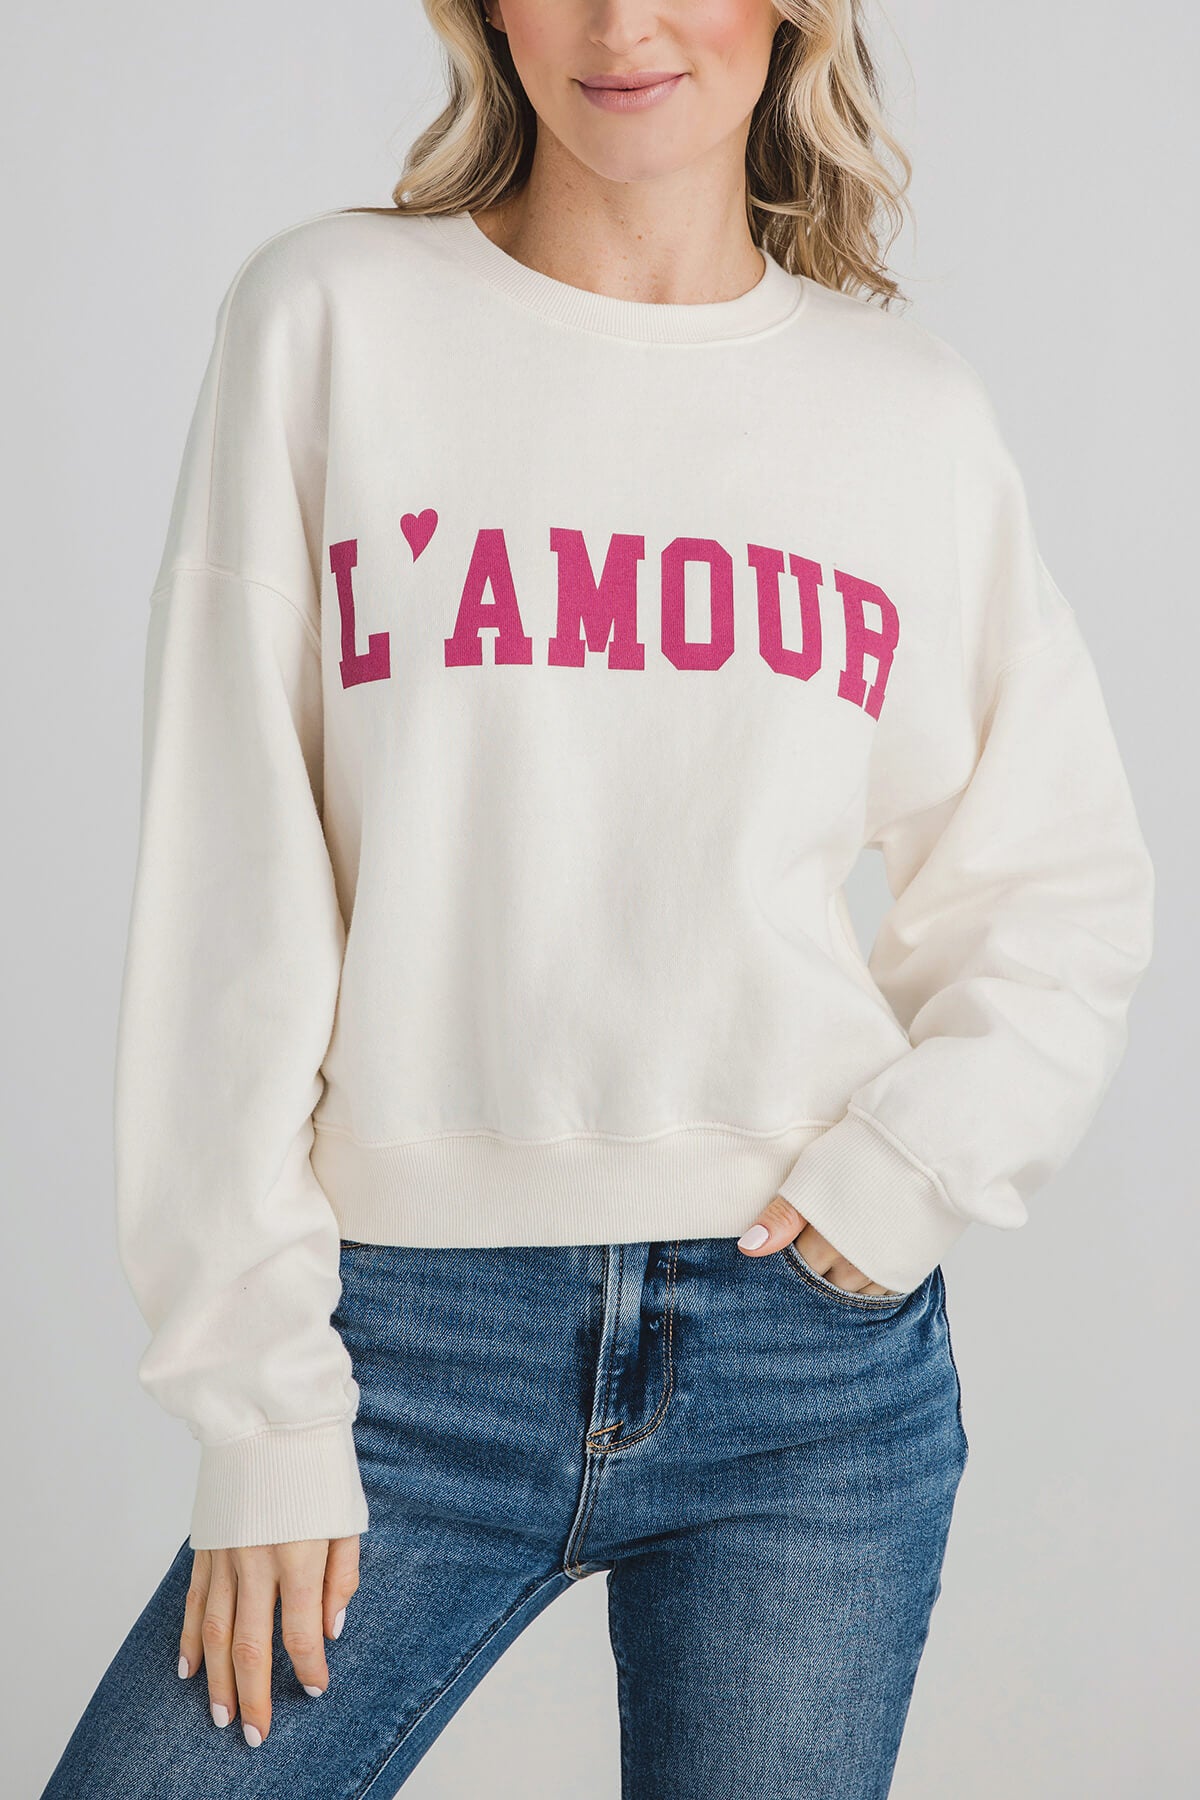 Z Supply L'Amour Sweatshirt